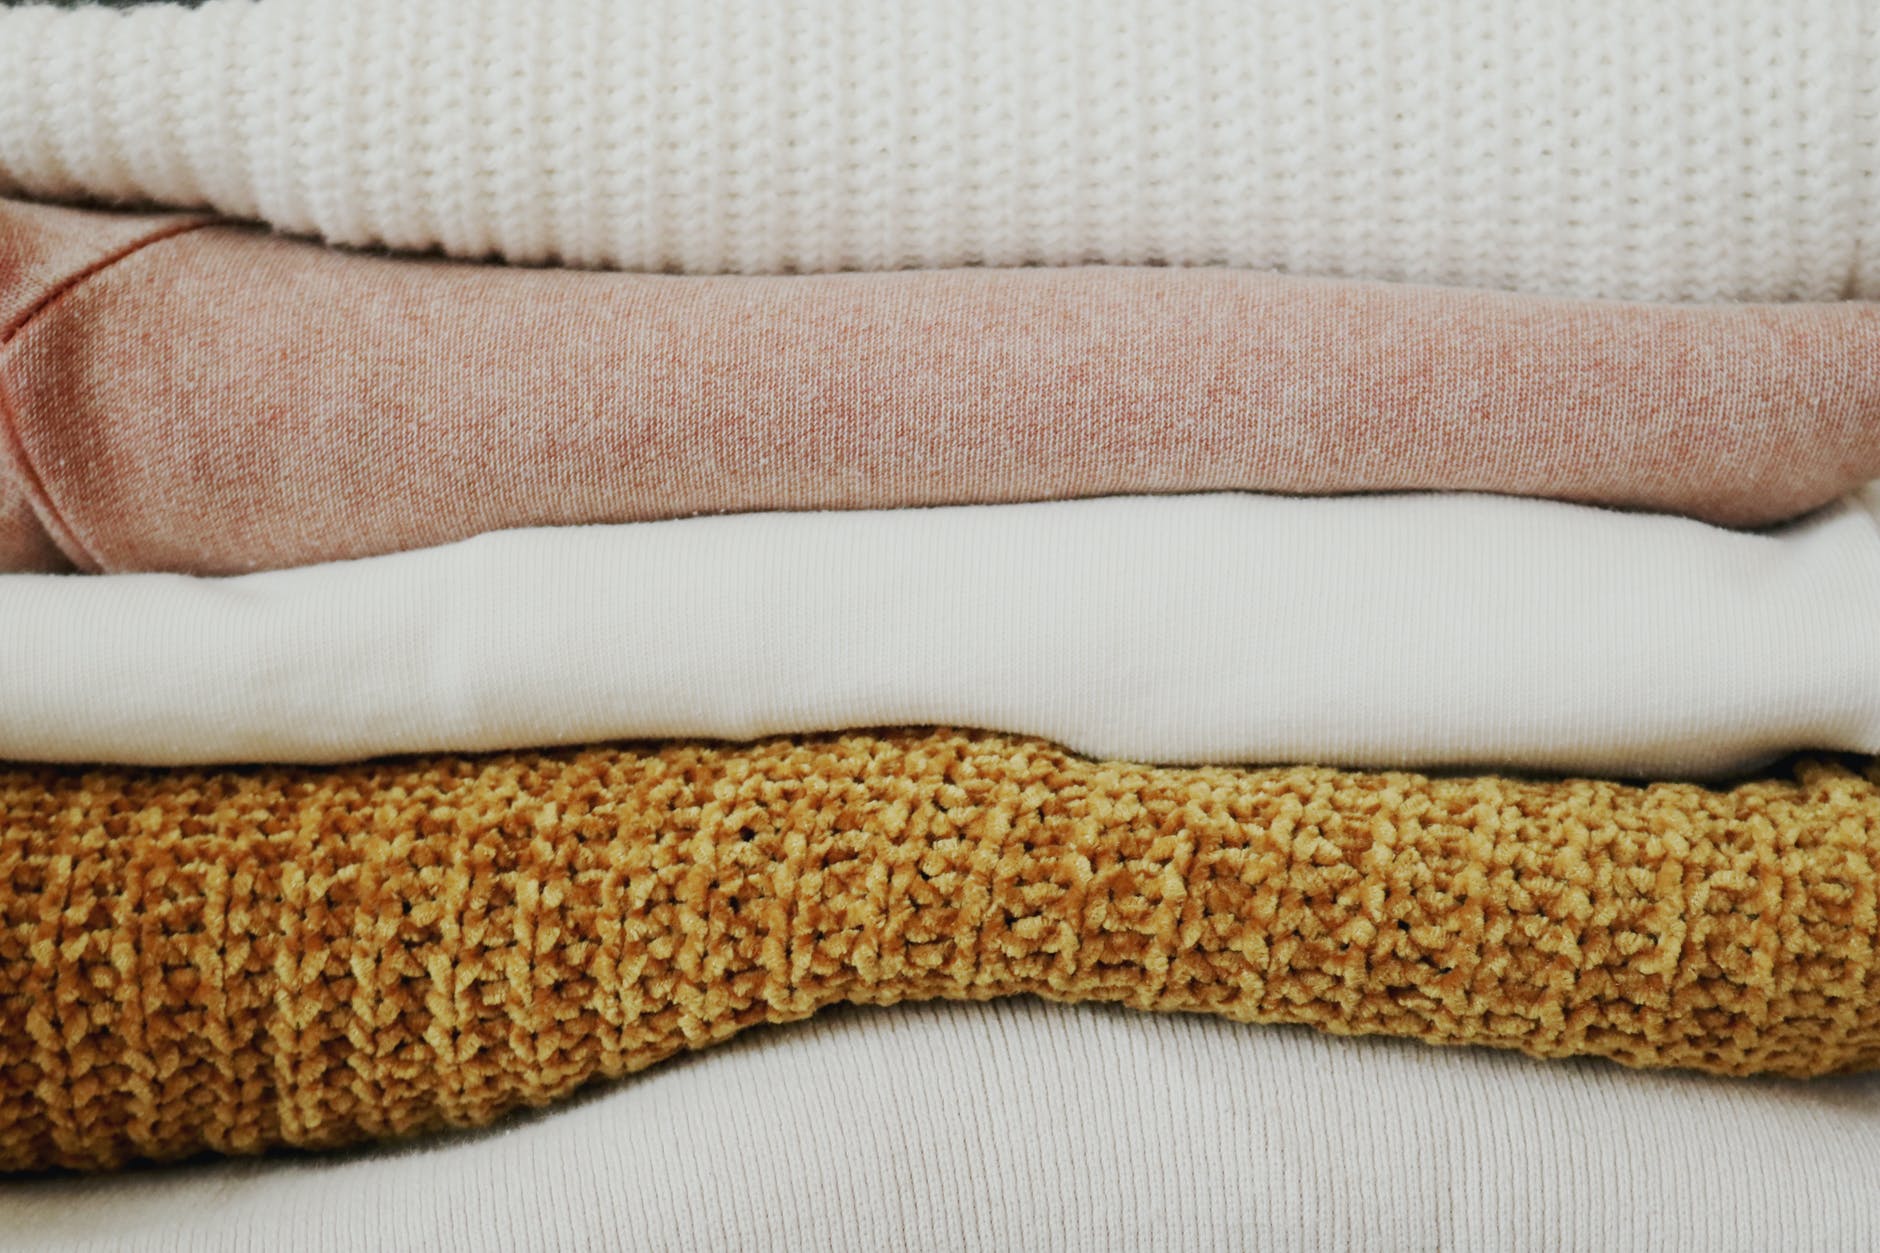 piled of folded textiles - Why I Quit My Capsule Wardrobe